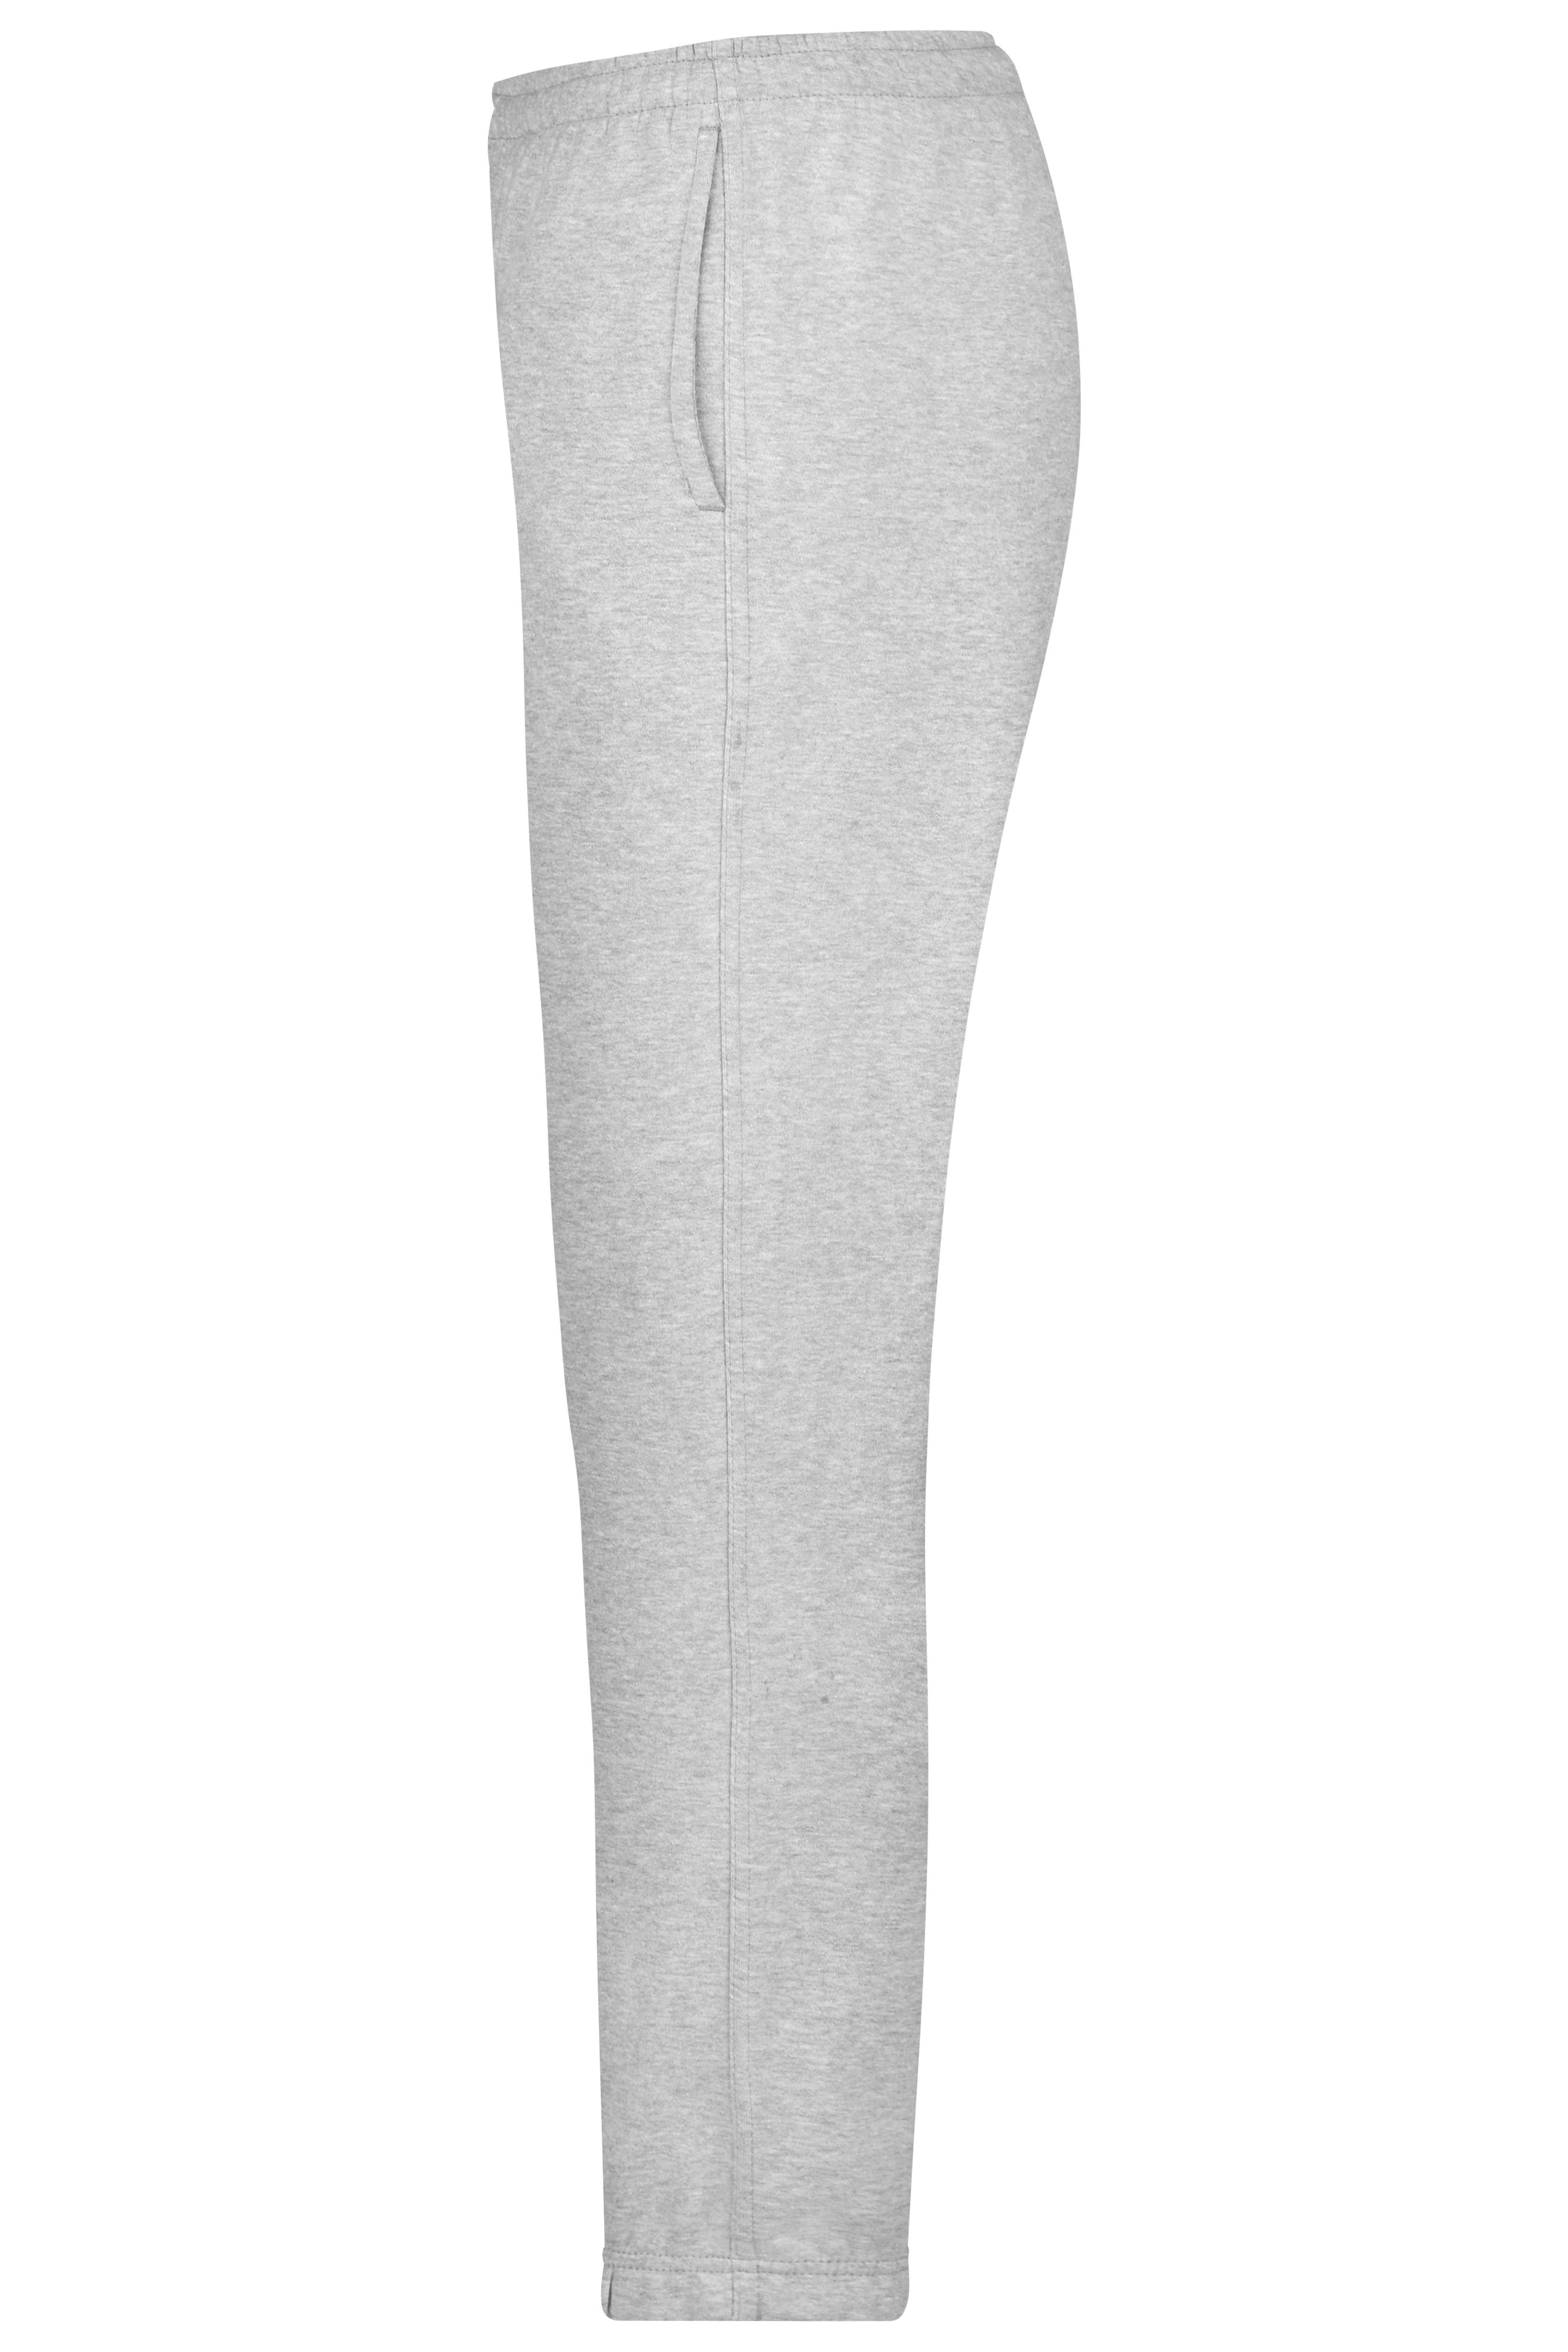 Ladies Ladies' Jogging Pants Grey-heather-Daiber